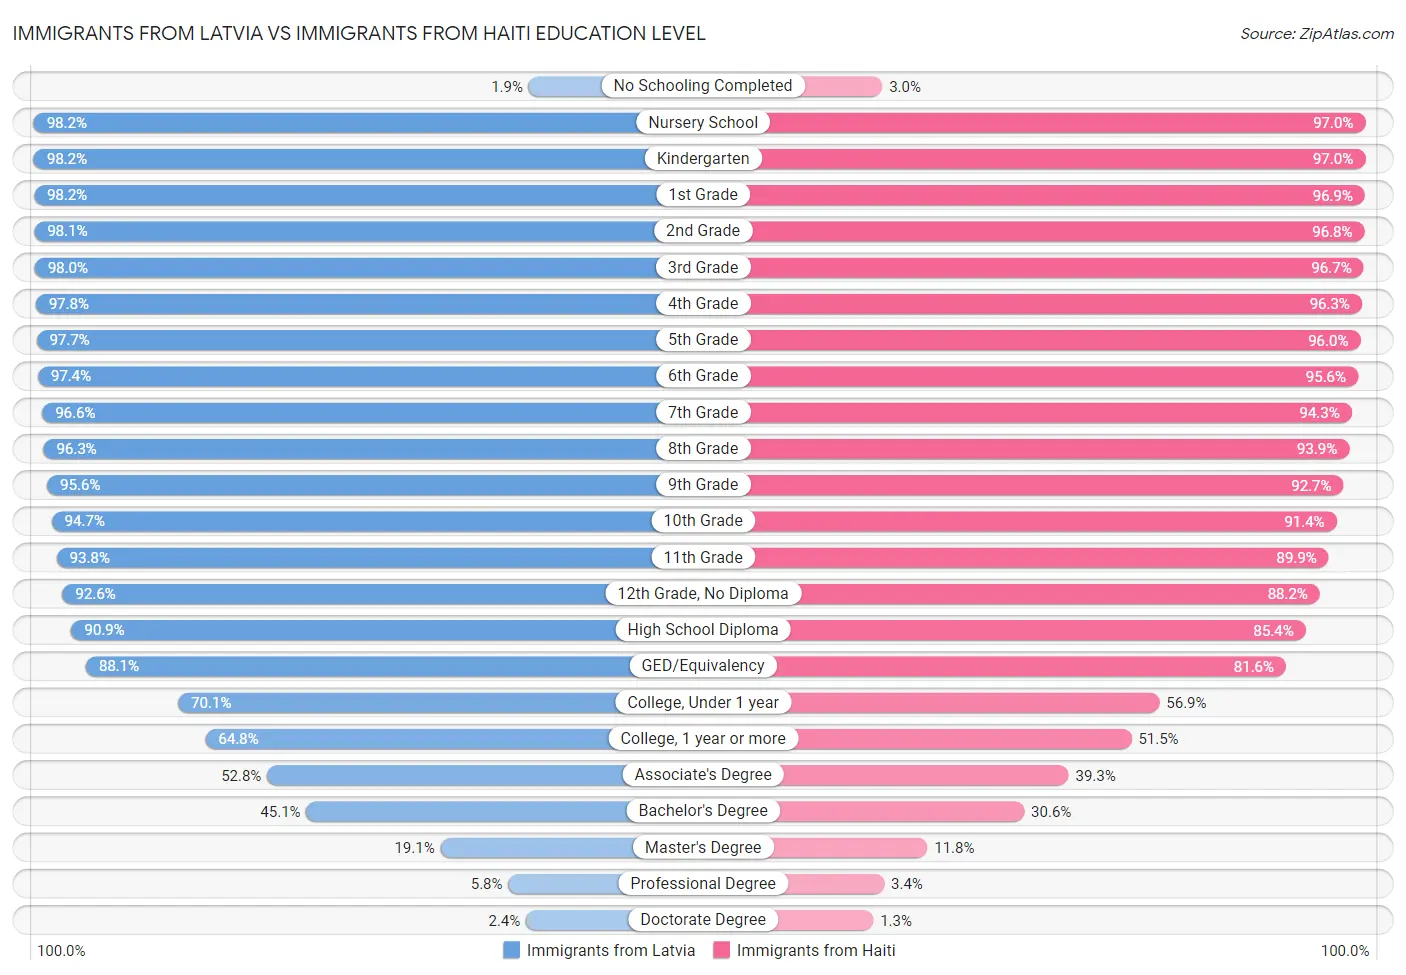 Immigrants from Latvia vs Immigrants from Haiti Education Level